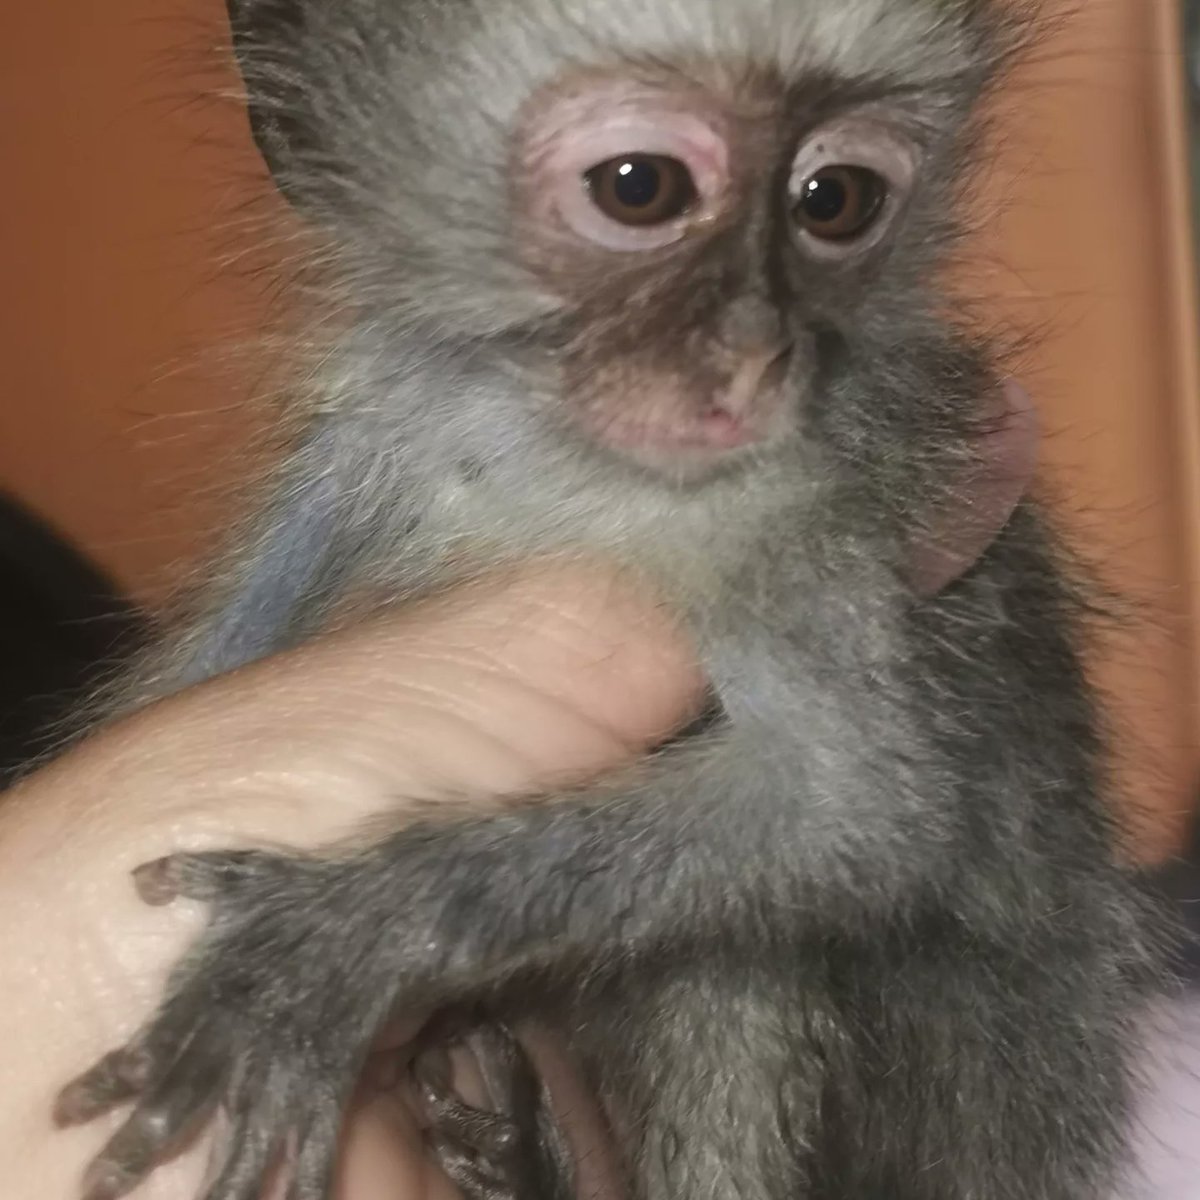 BABY ANU, a special needs baby, safe at Monkey Helpline Rehabilitation Centre  #notapet#monkeyhelpline#volunteer#volunteerabroad#volunteersmakeadifference